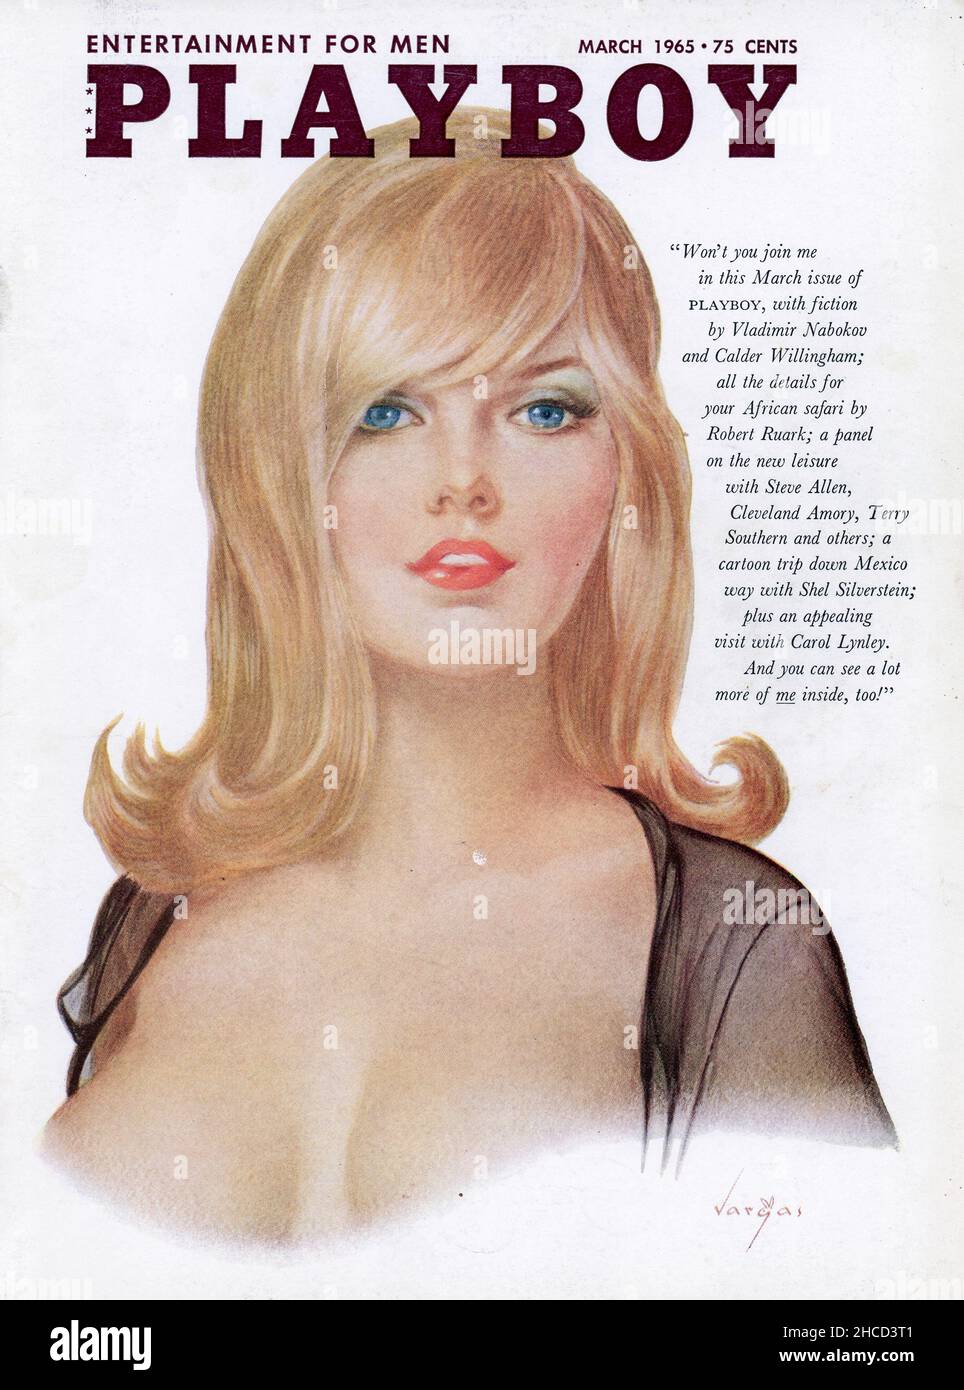 Vintage März 1965 Ausgabe des Cover des 'Playboy' Magazins, USA  Stockfotografie - Alamy